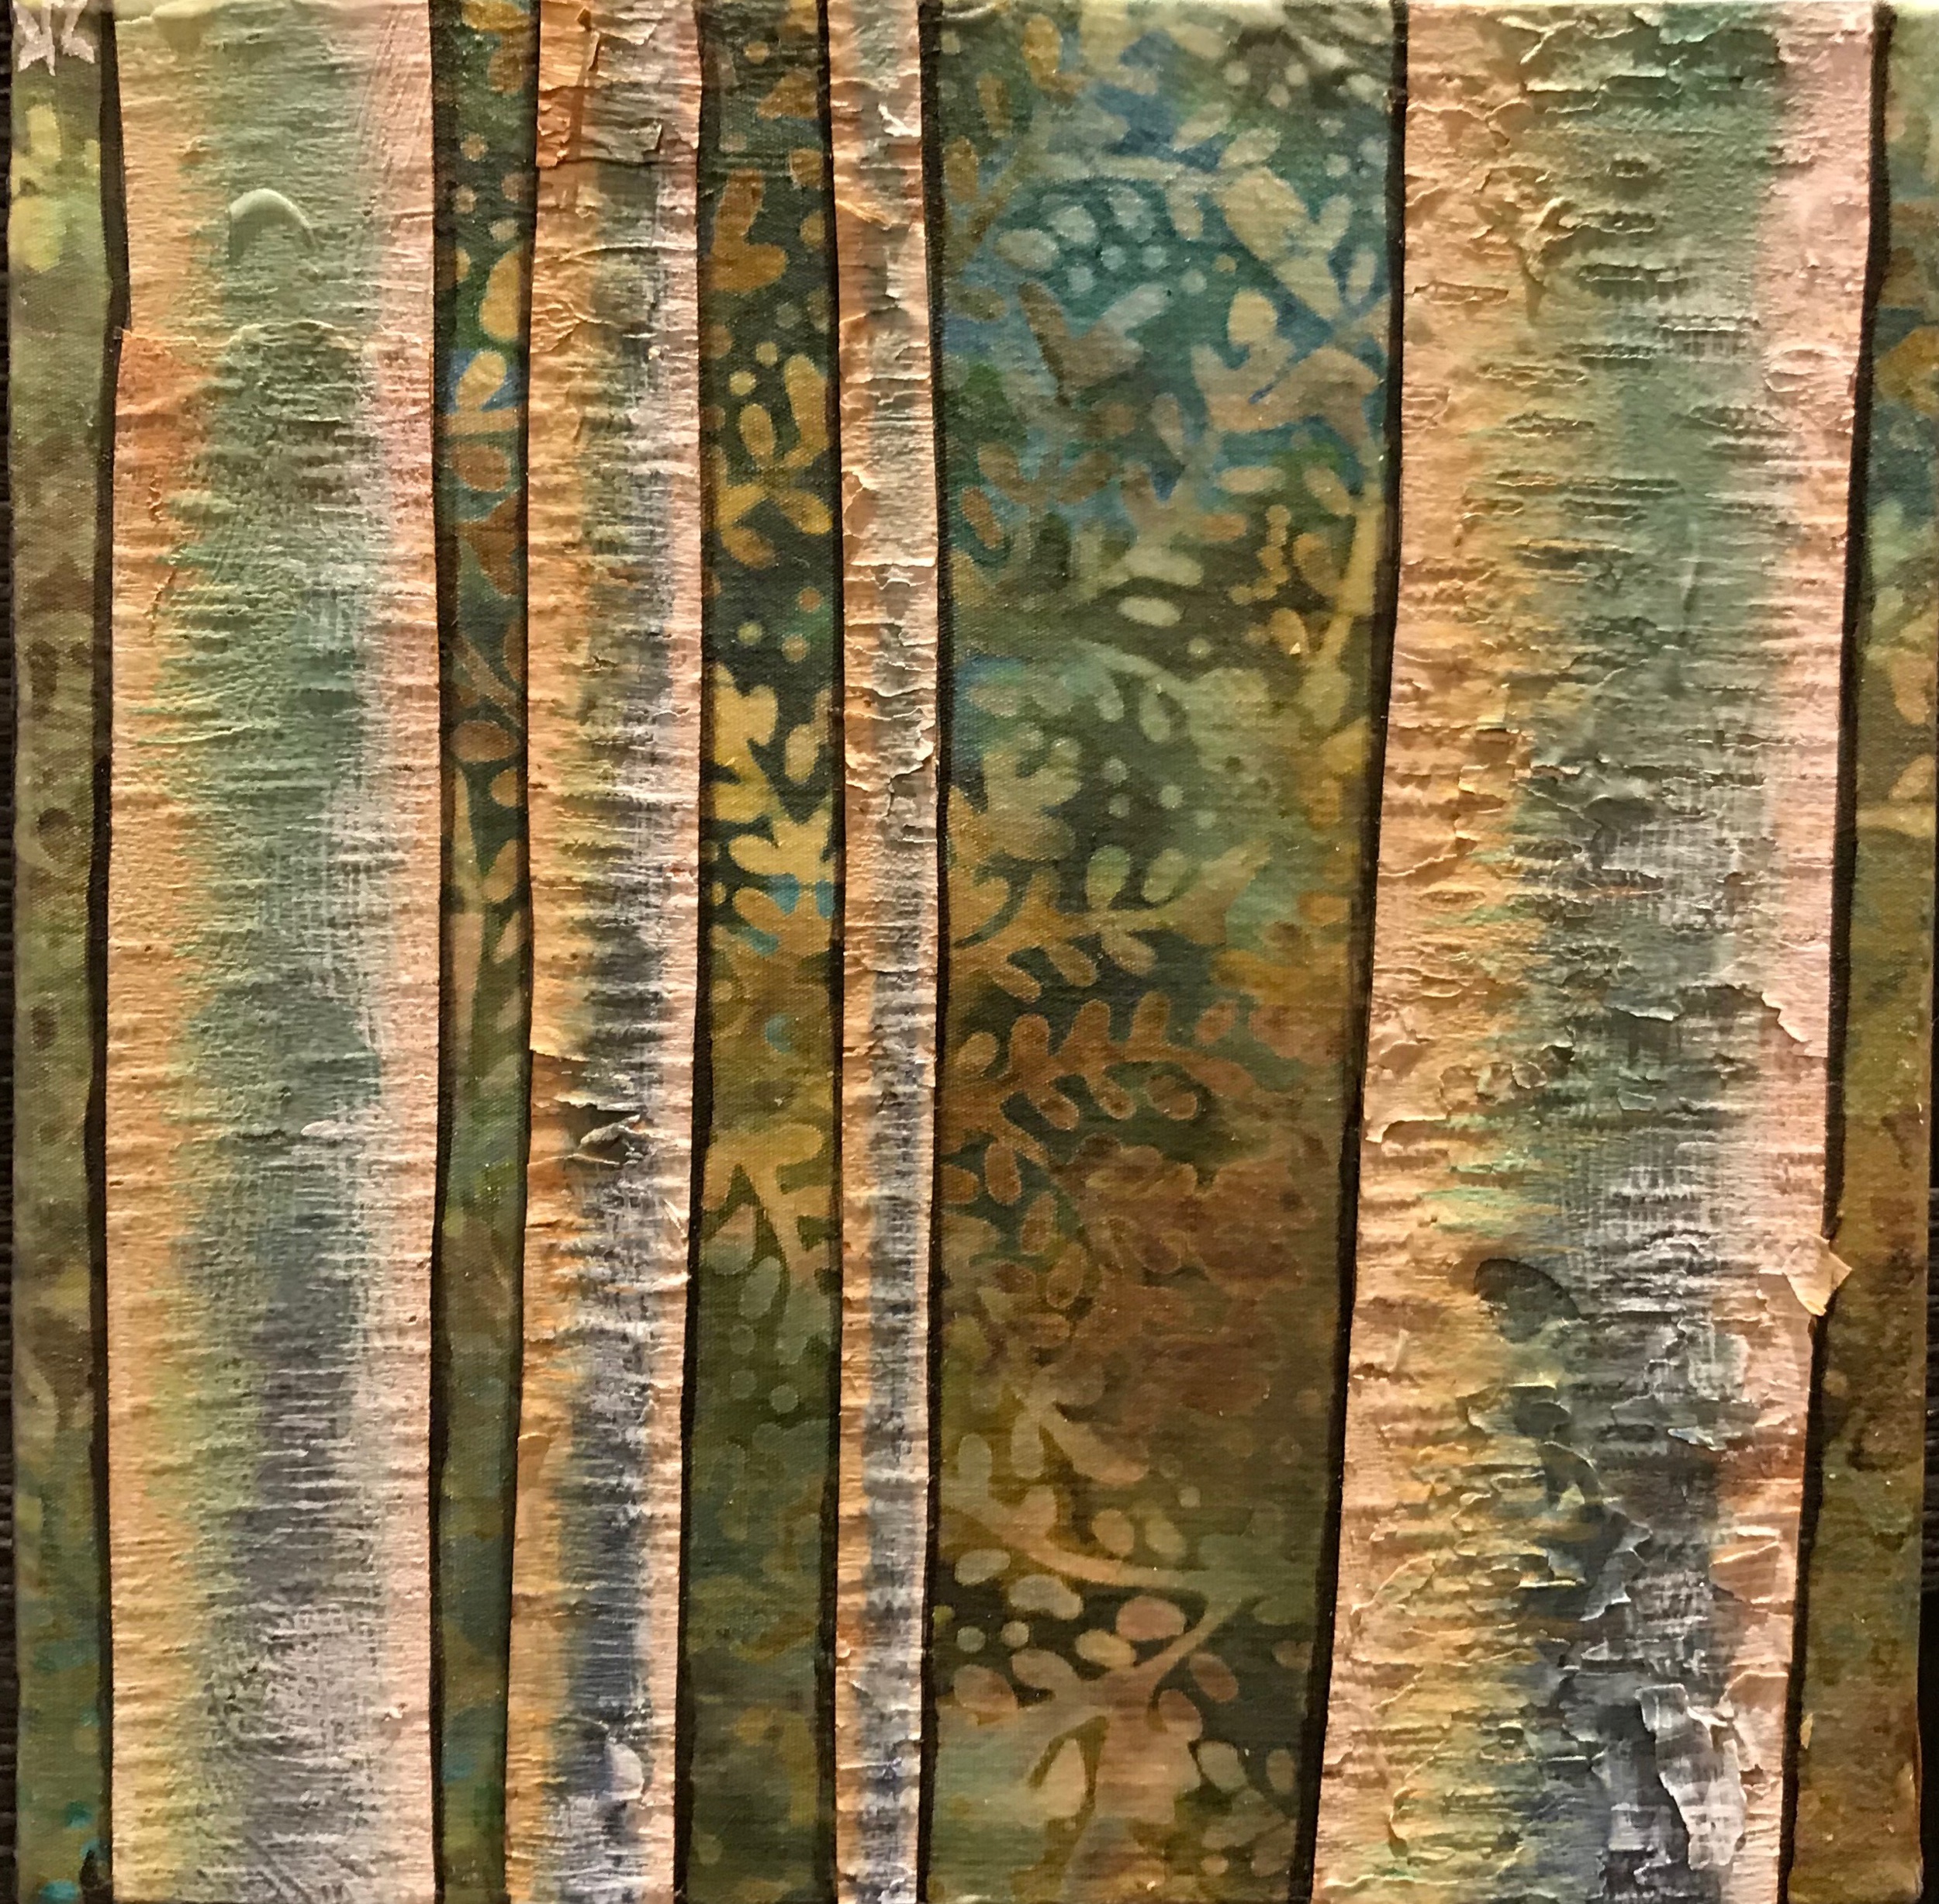  Sold Mixed Media: birch bark and acrylic on fabric. 6” x 6” 